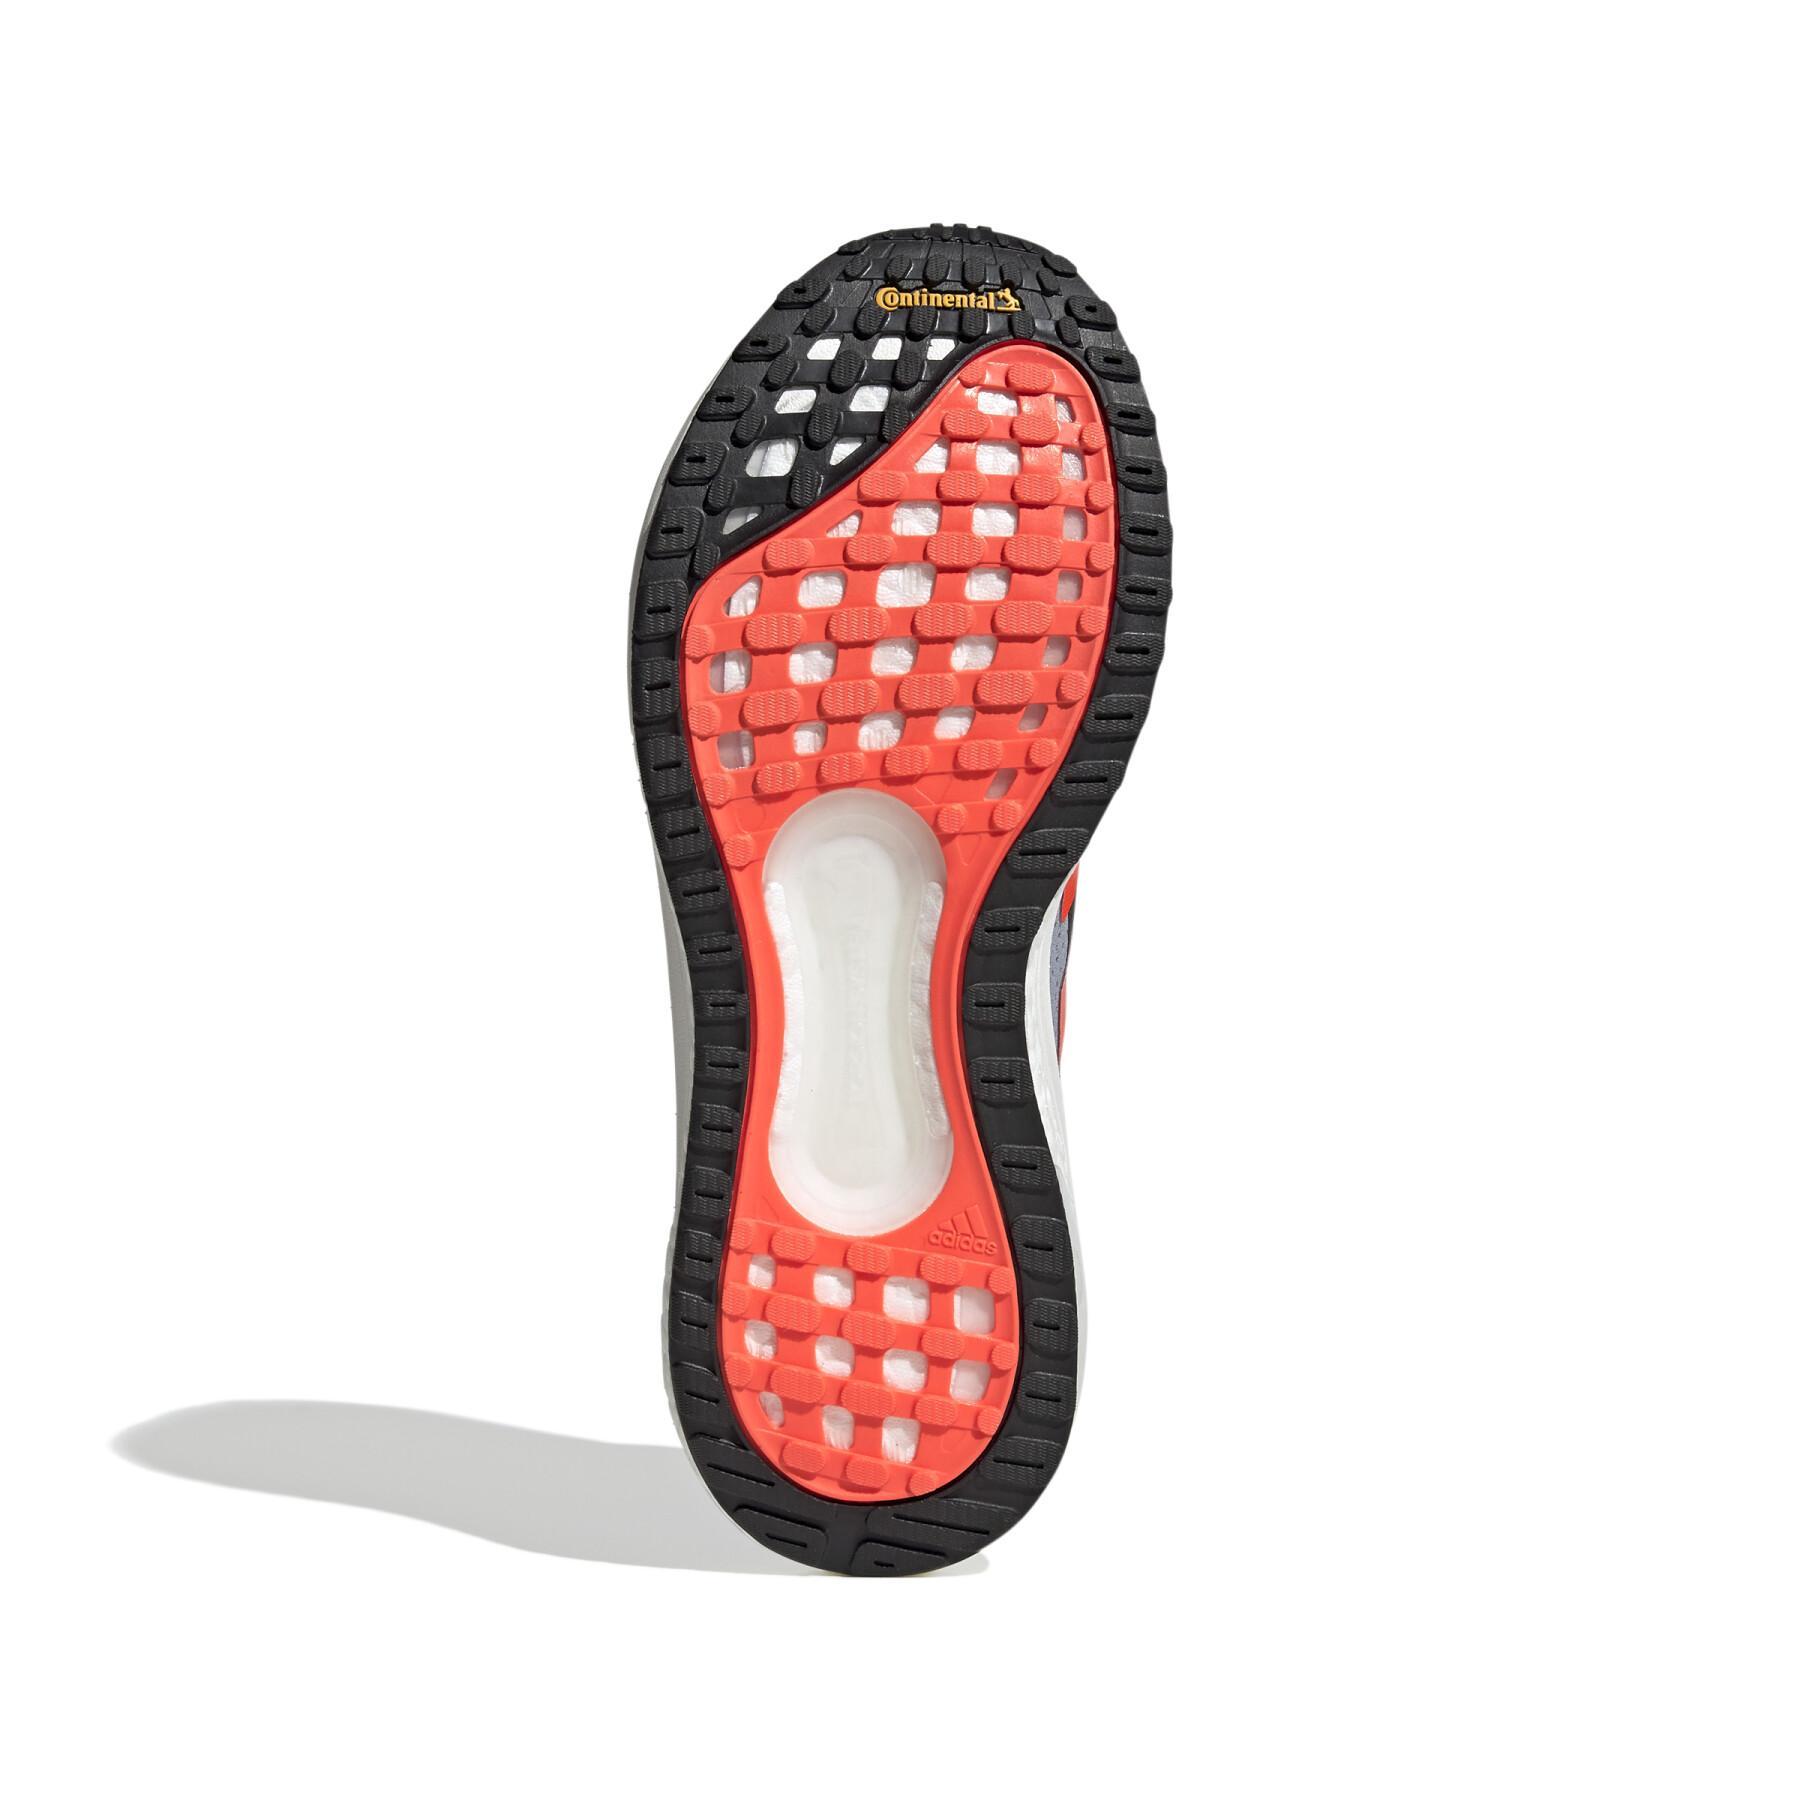 Zapatillas de running adidas SolarGlide 4